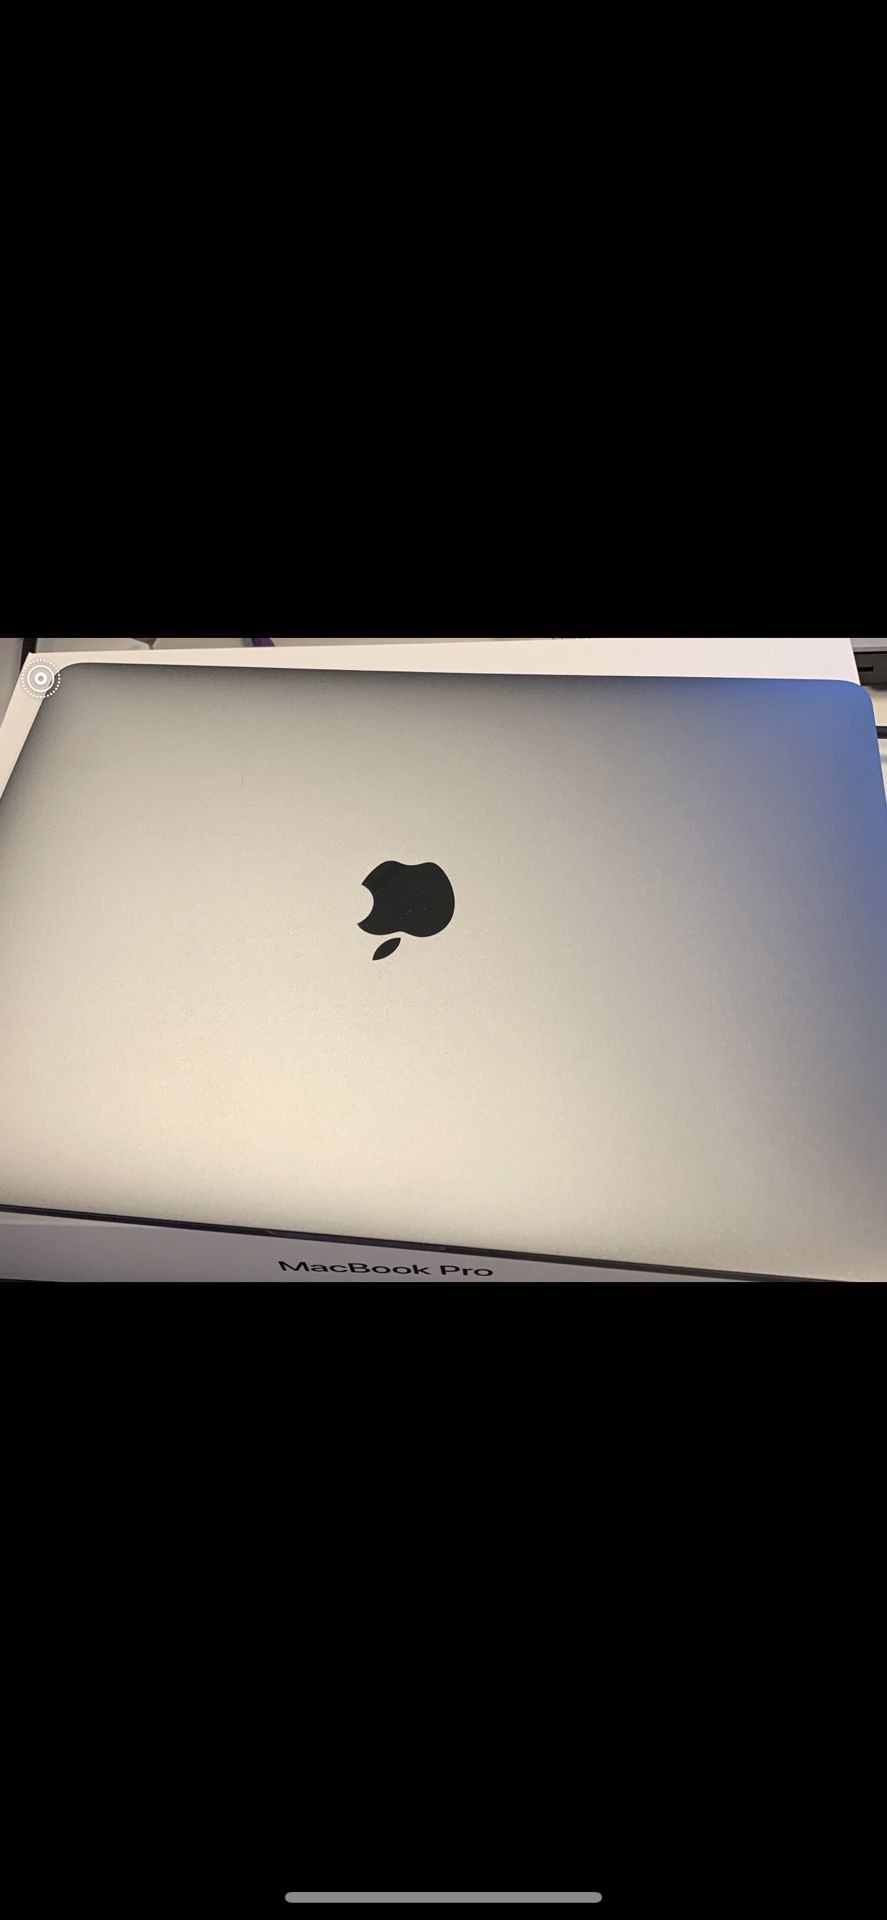 New Mac Book Pro 2017, No Touch Bar.